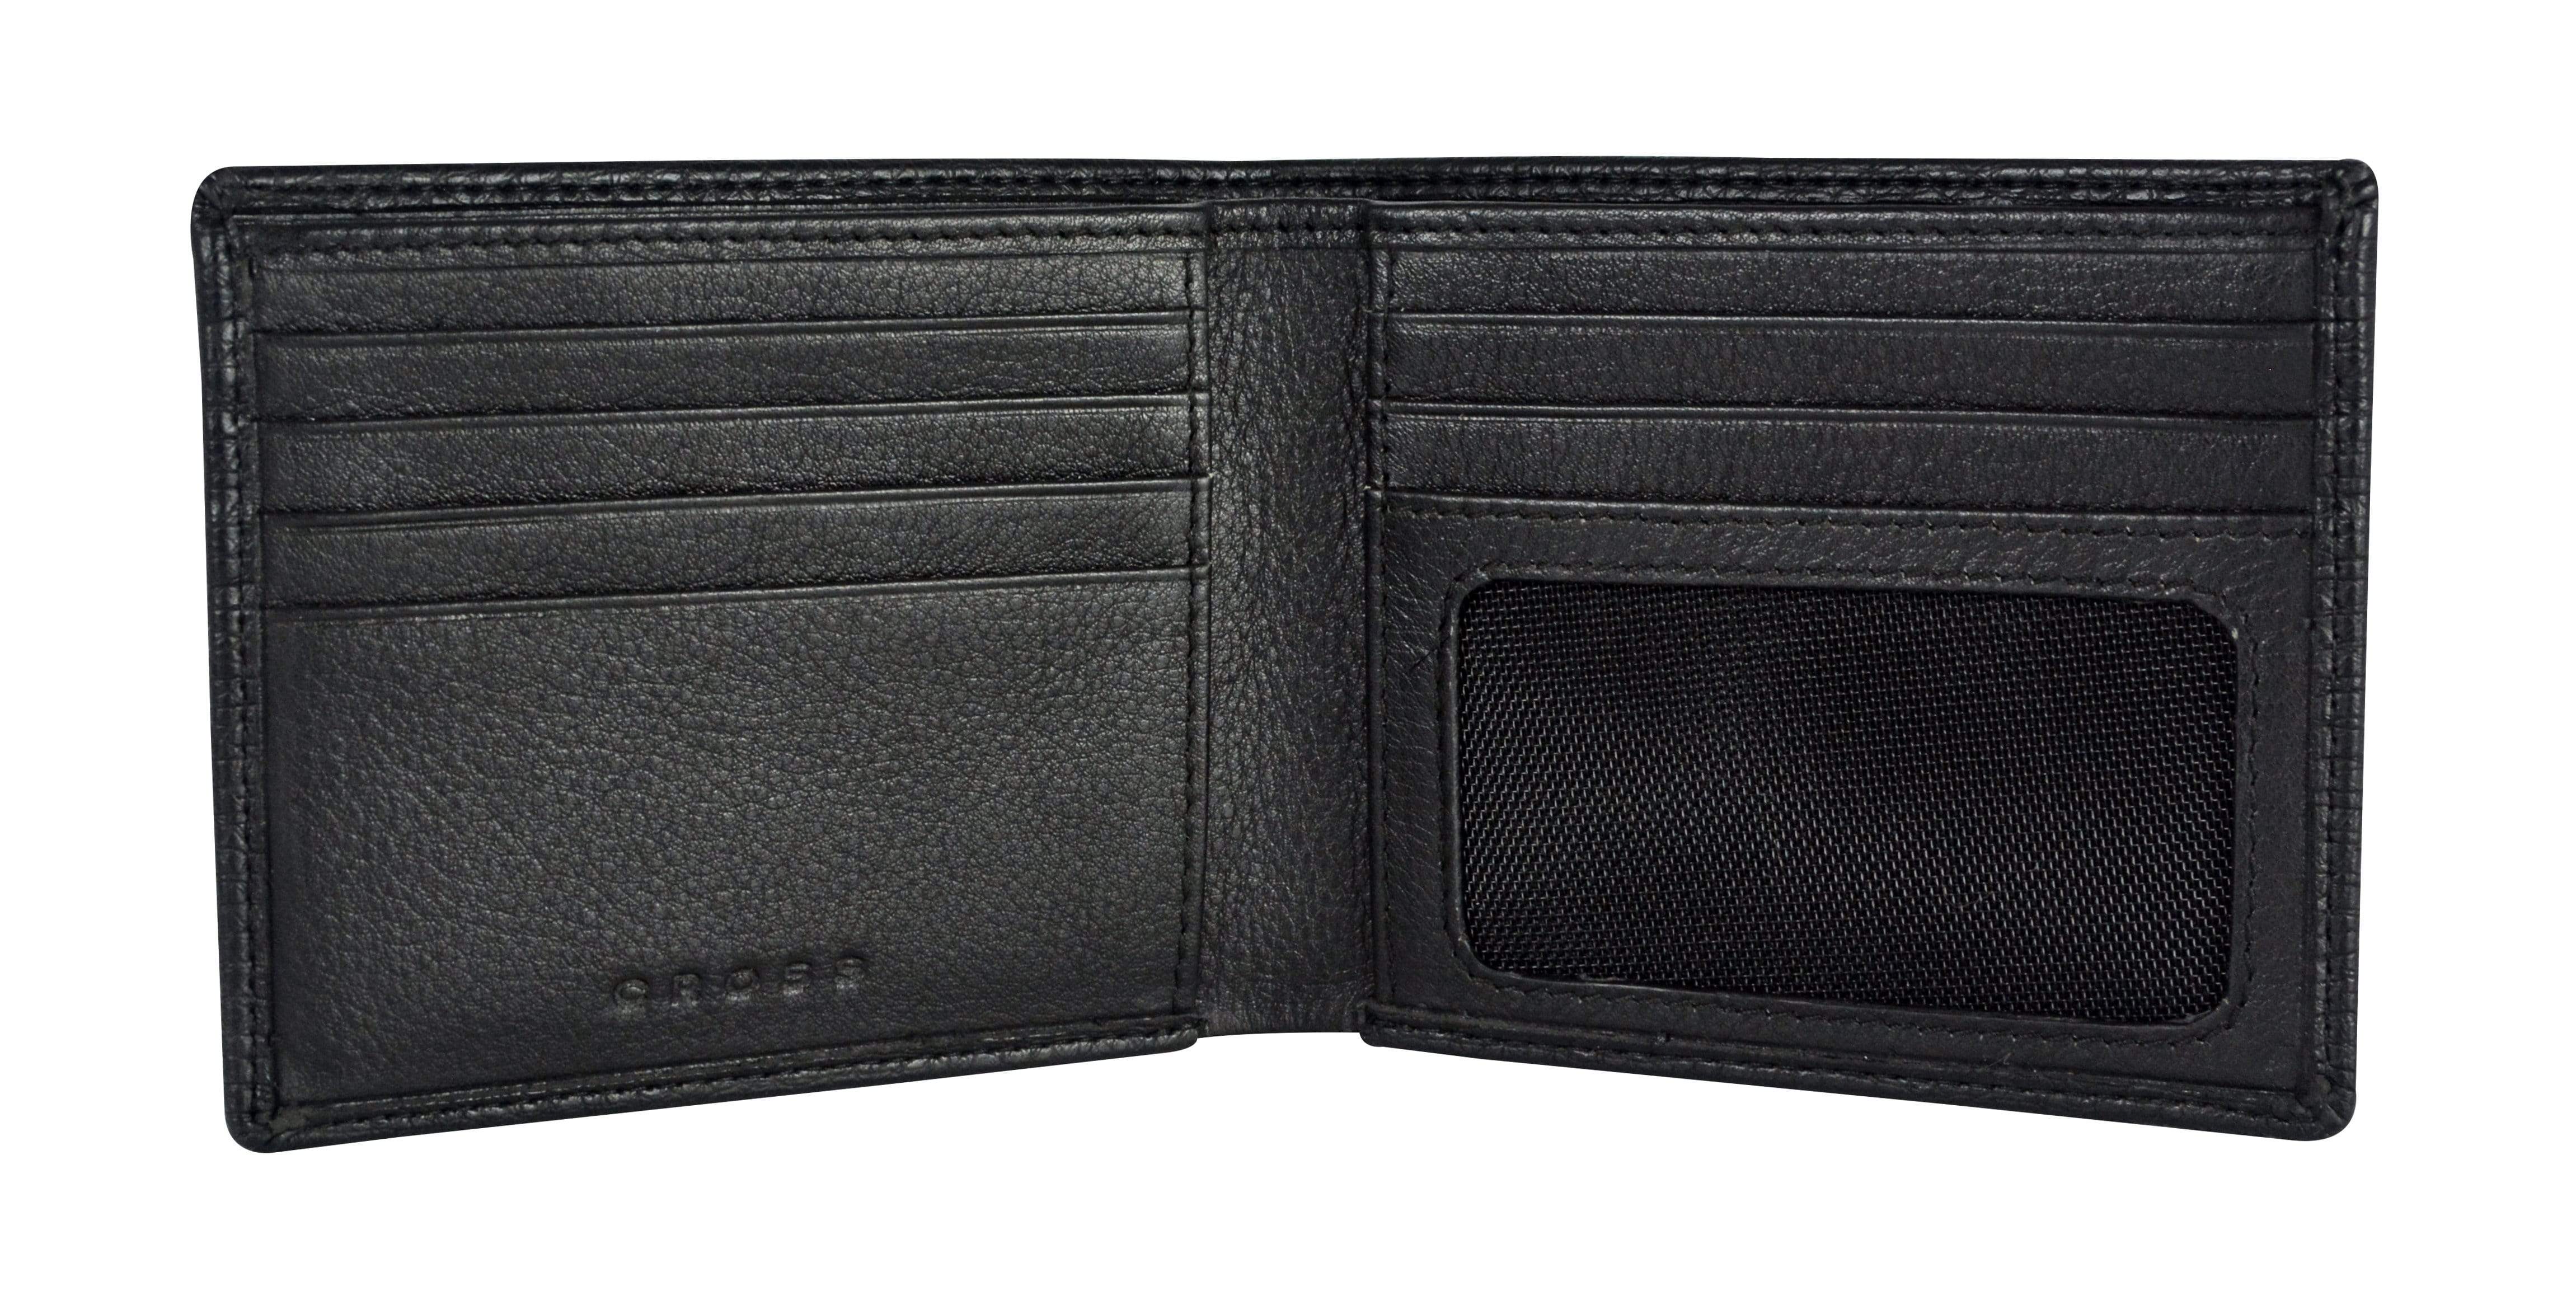 Cross RTC ID Leather Wallet for Men - Black - AC238366N-1 - Jashanmal Home